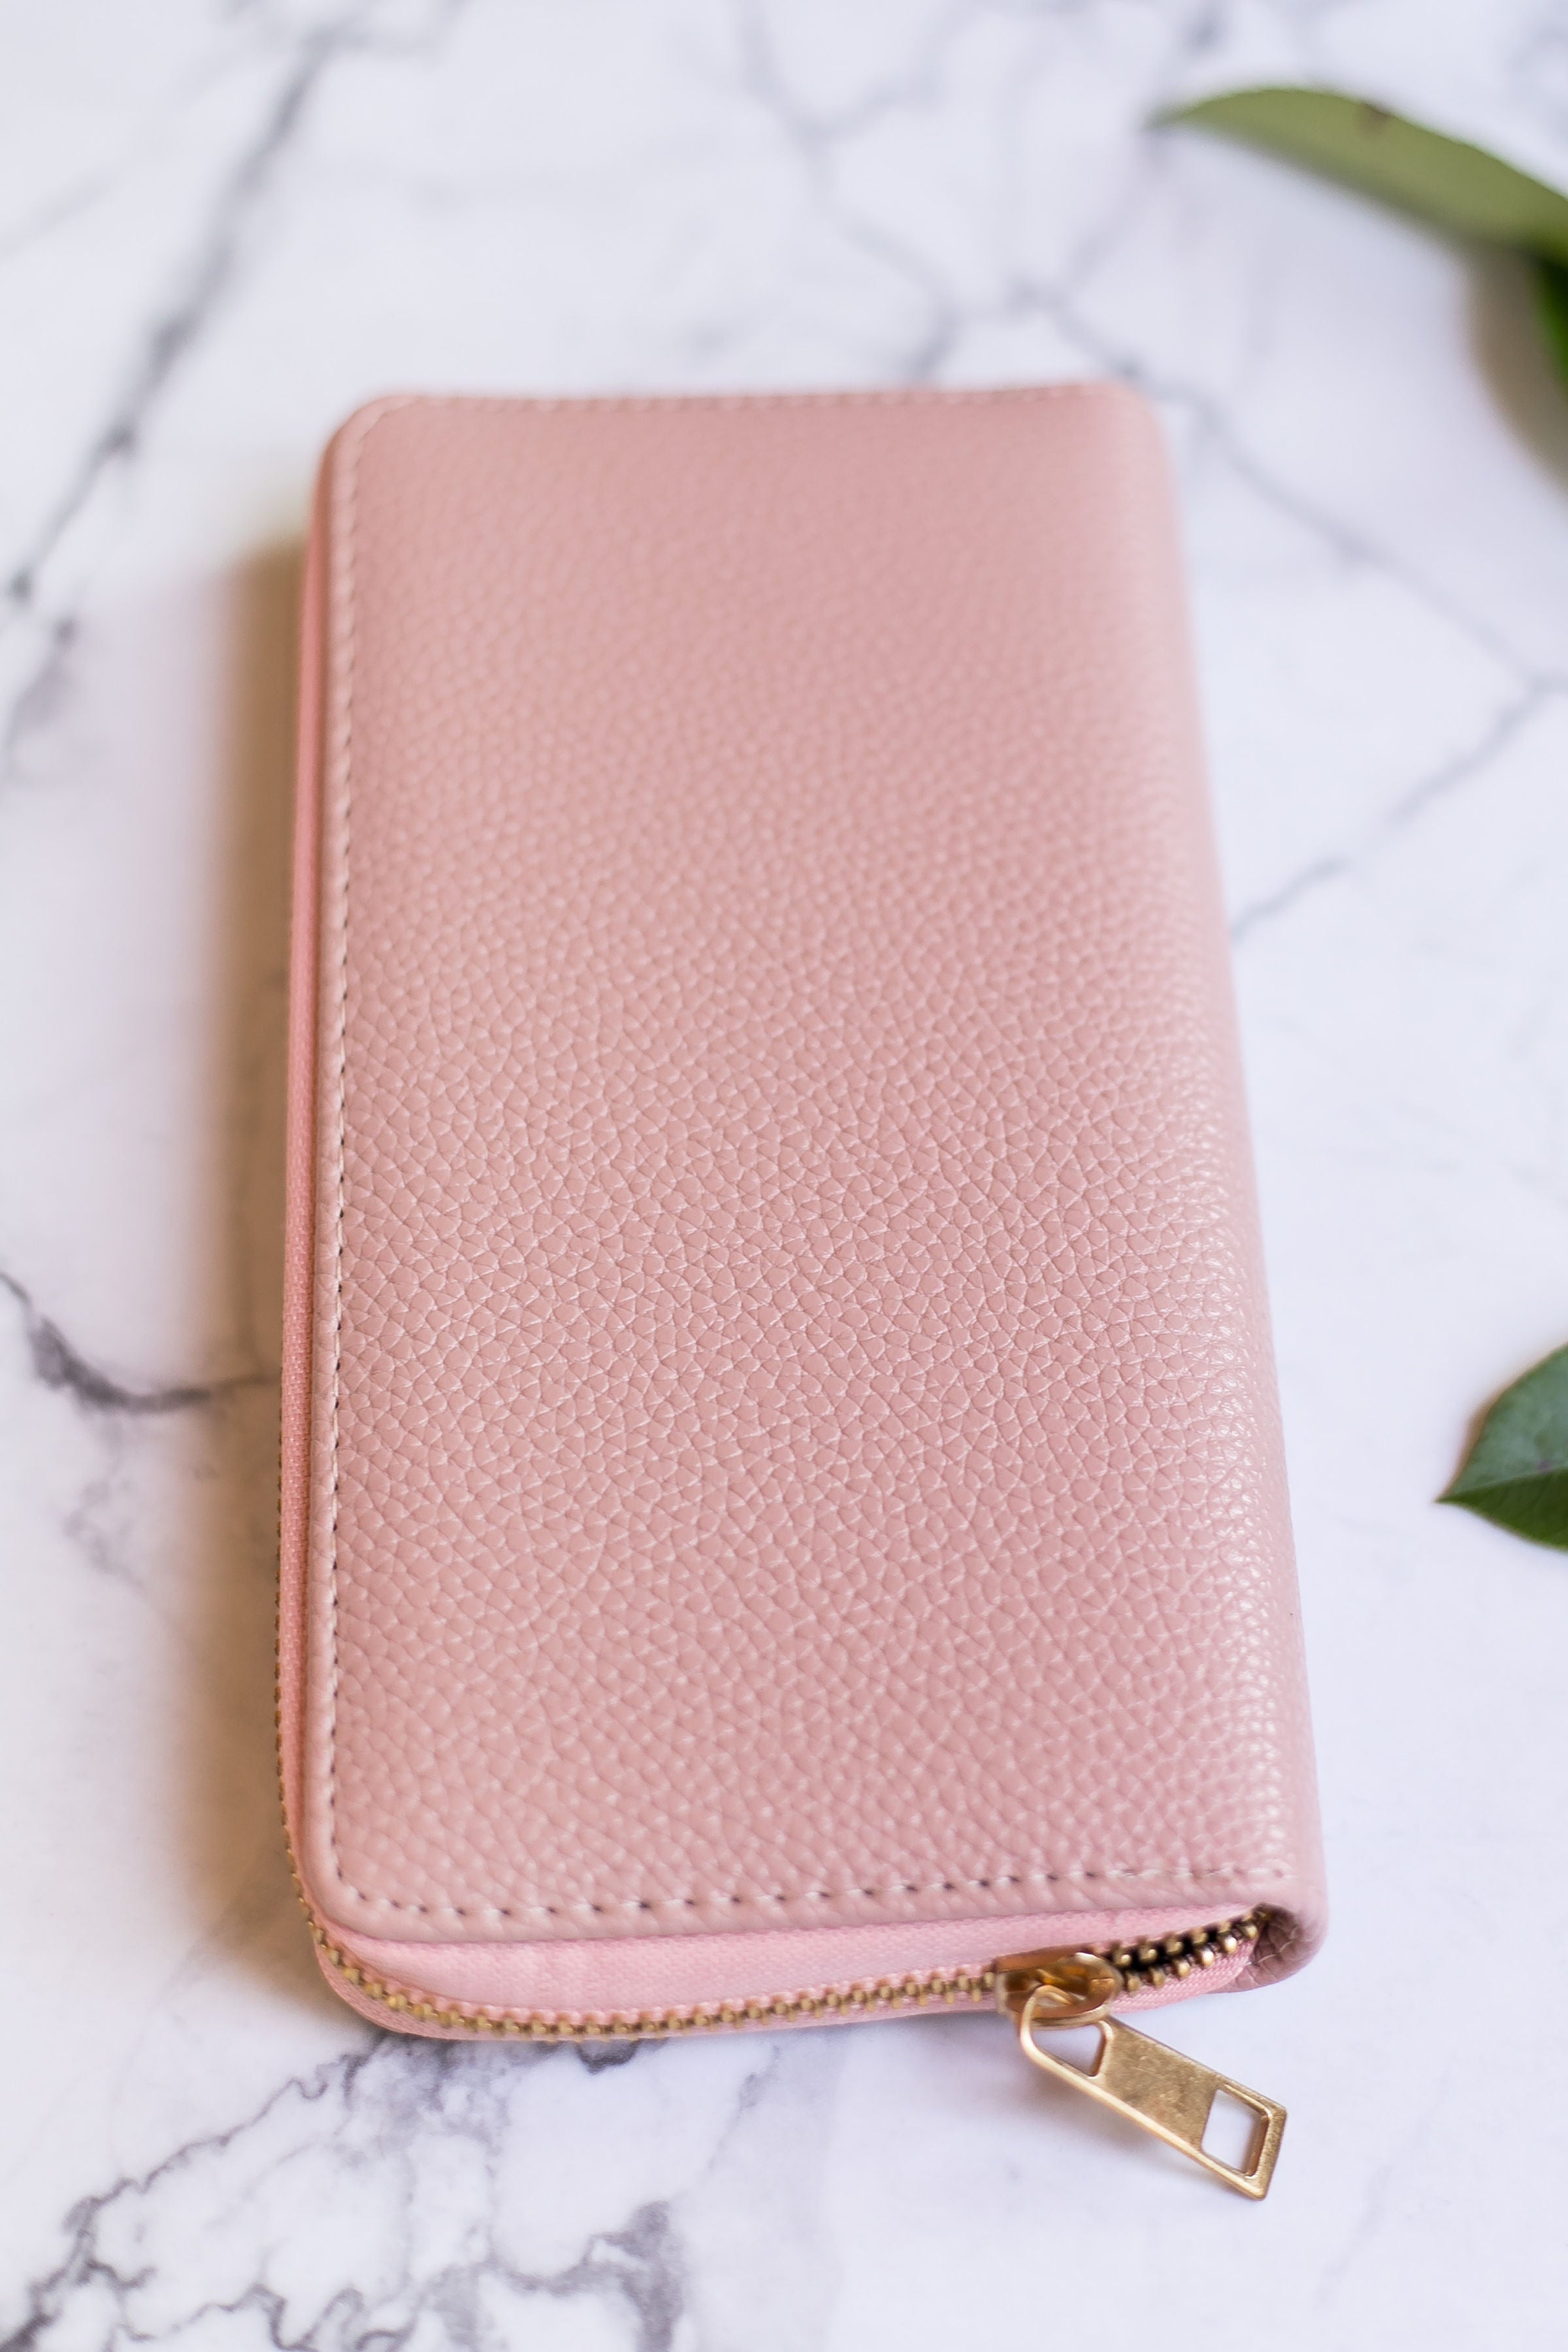 Blush Pink Zip-Around Wallet - Giddy Up Glamour Boutique